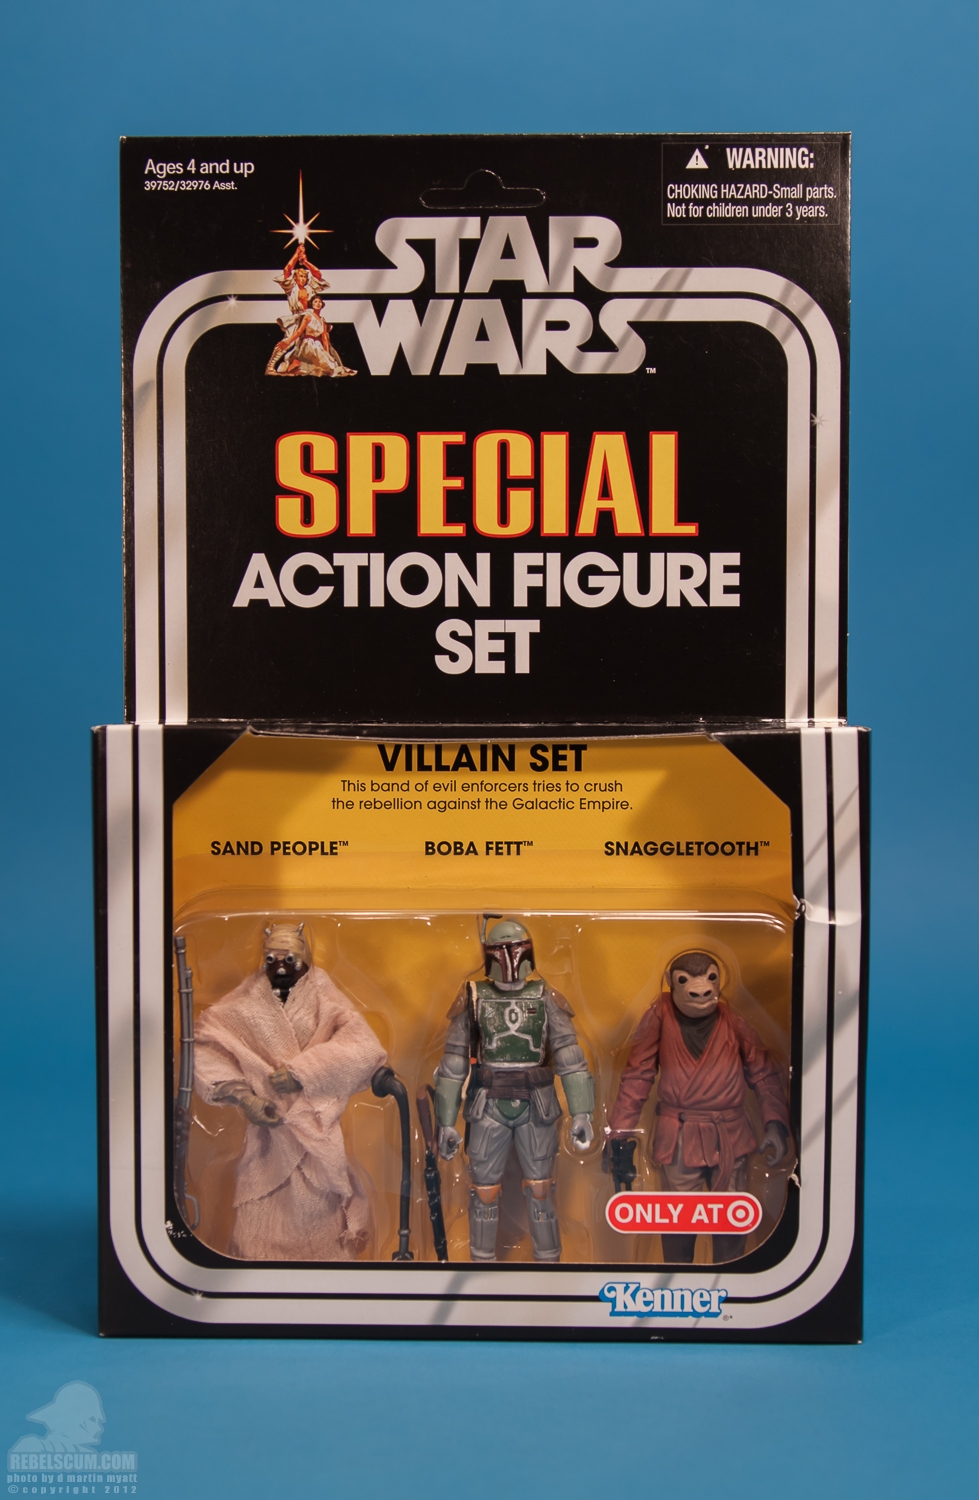 Villain_Set_Snaggletooth_Special_Action_Figure_Set_Star_Wars_Hasbro-44.jpg